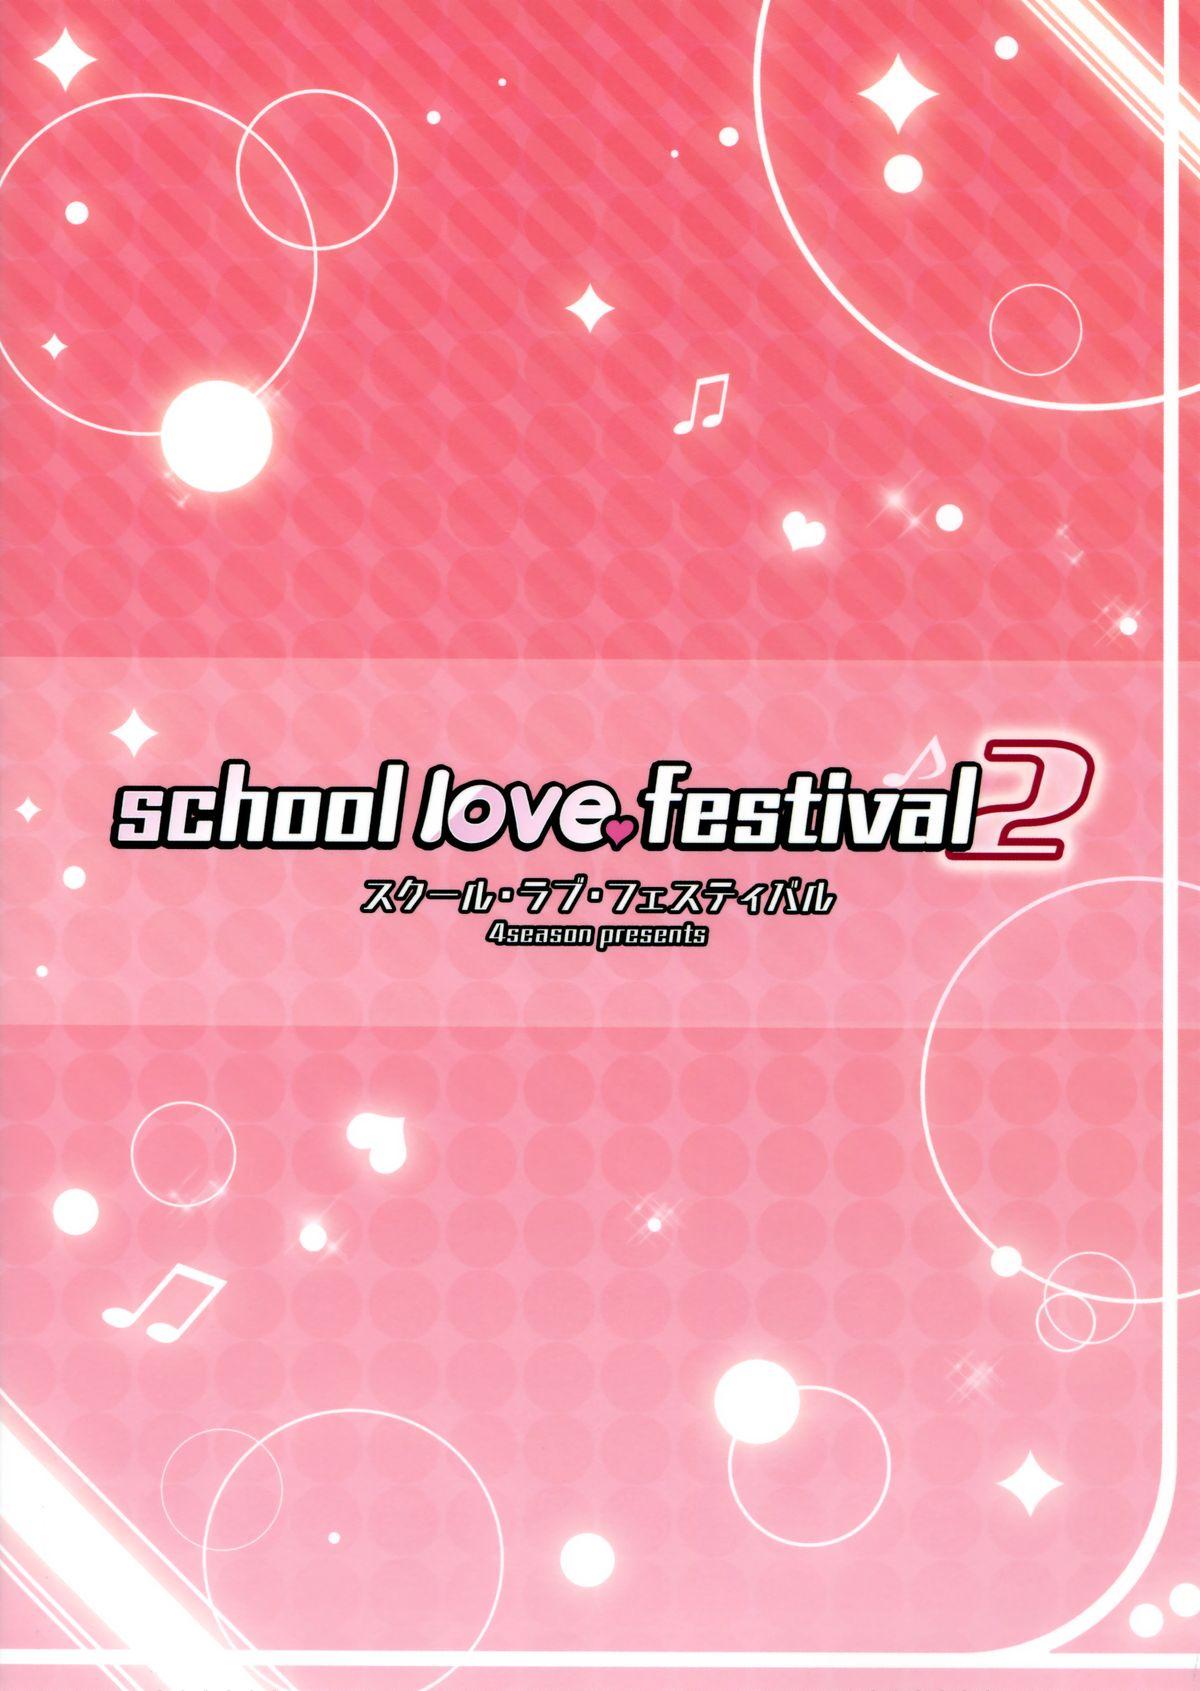 school love festival2 21